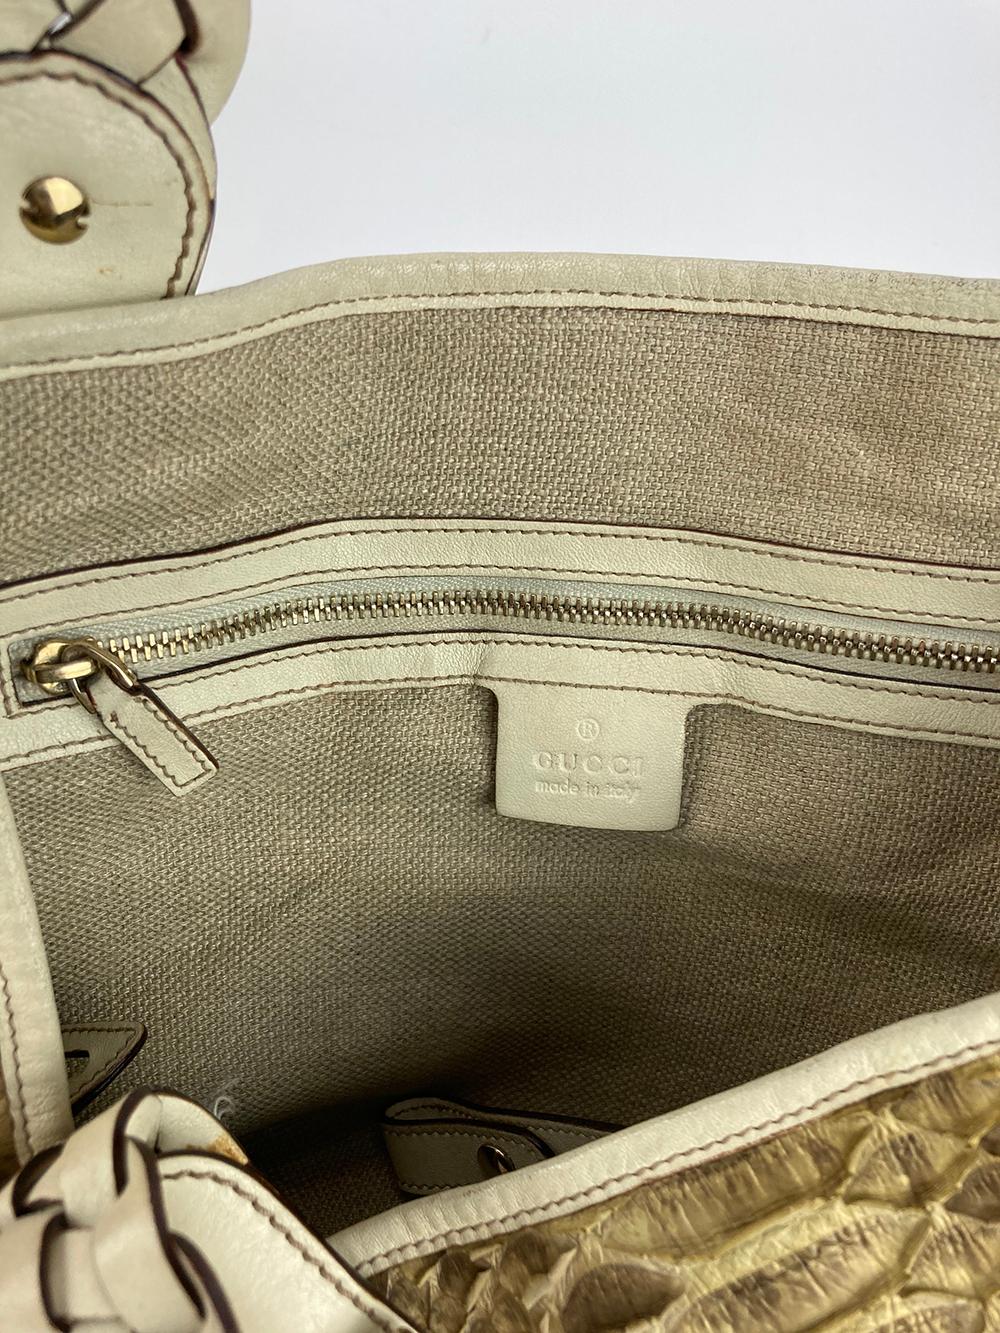 Gucci Python Pelham Shoulder Bag For Sale 4